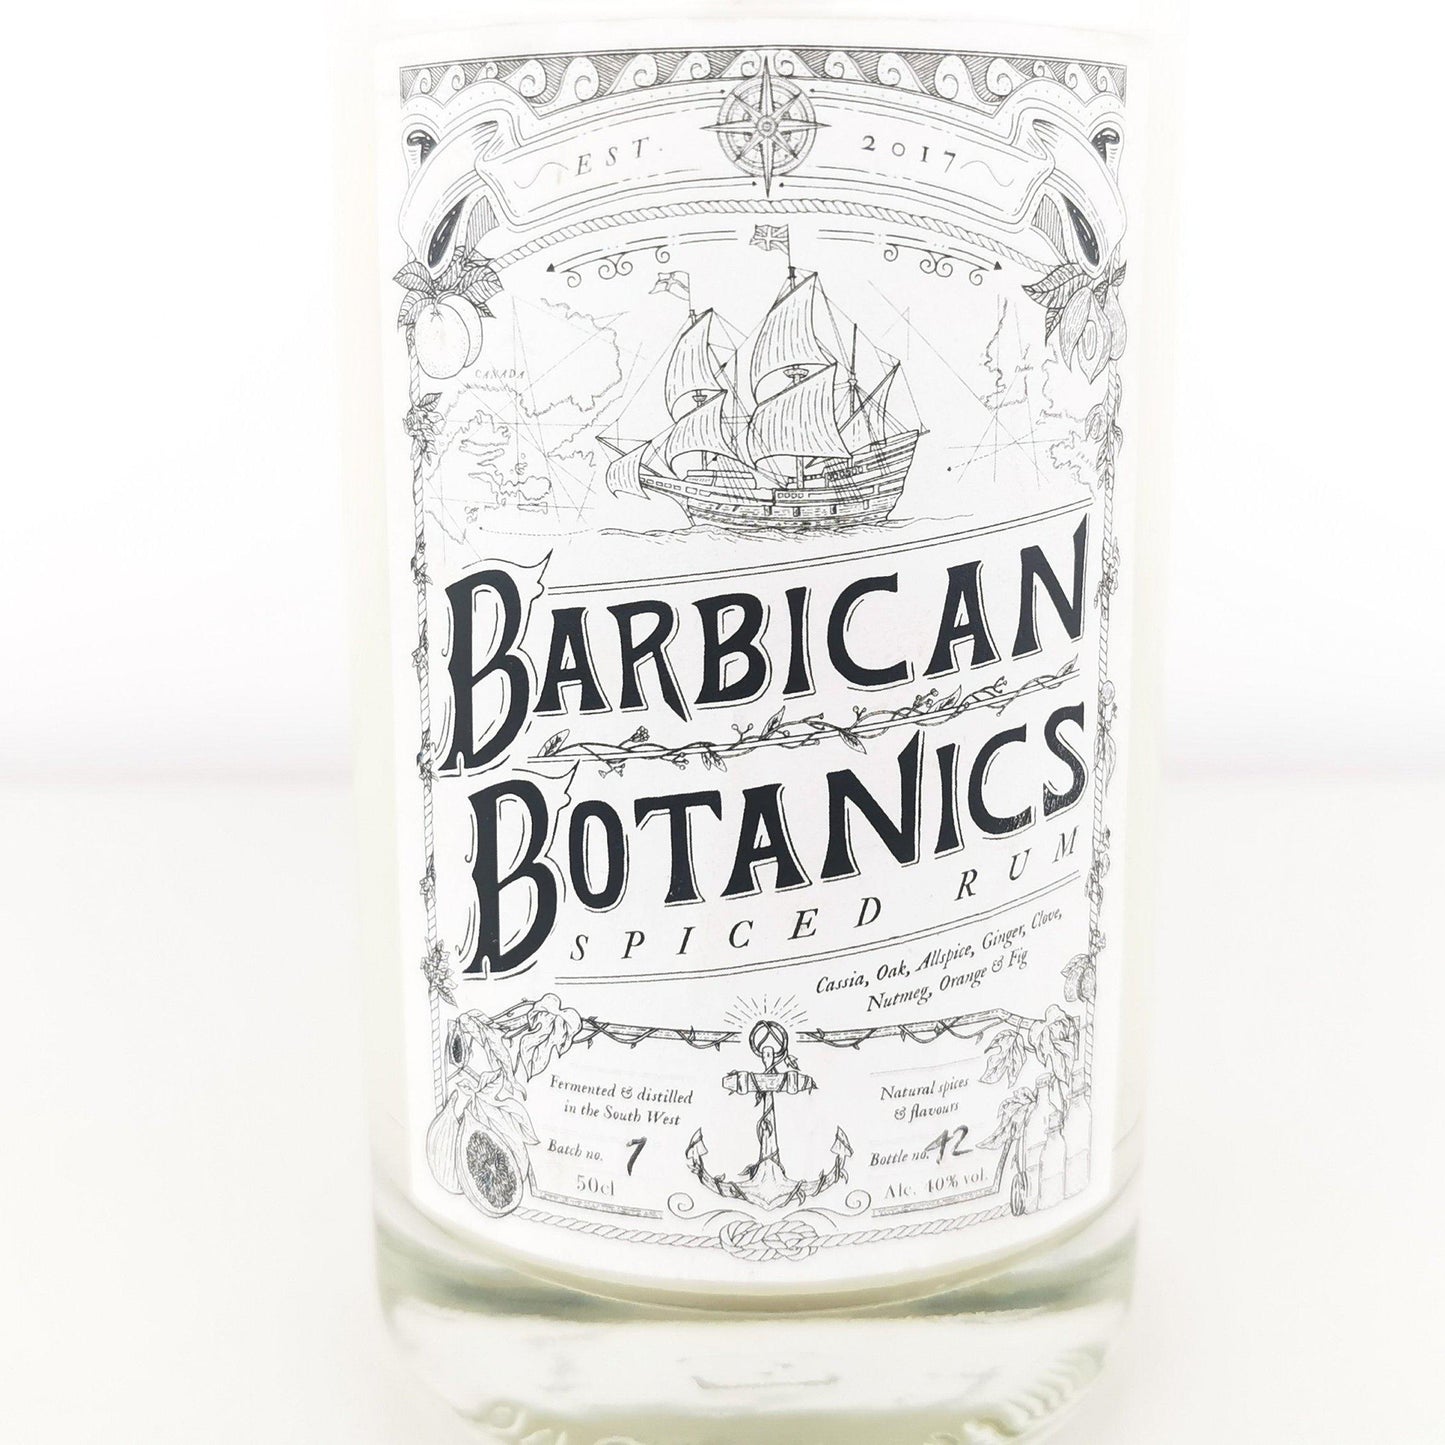 Barbican Botanics Spiced Rum Bottle Candle Rum Bottle Candles Adhock Homeware